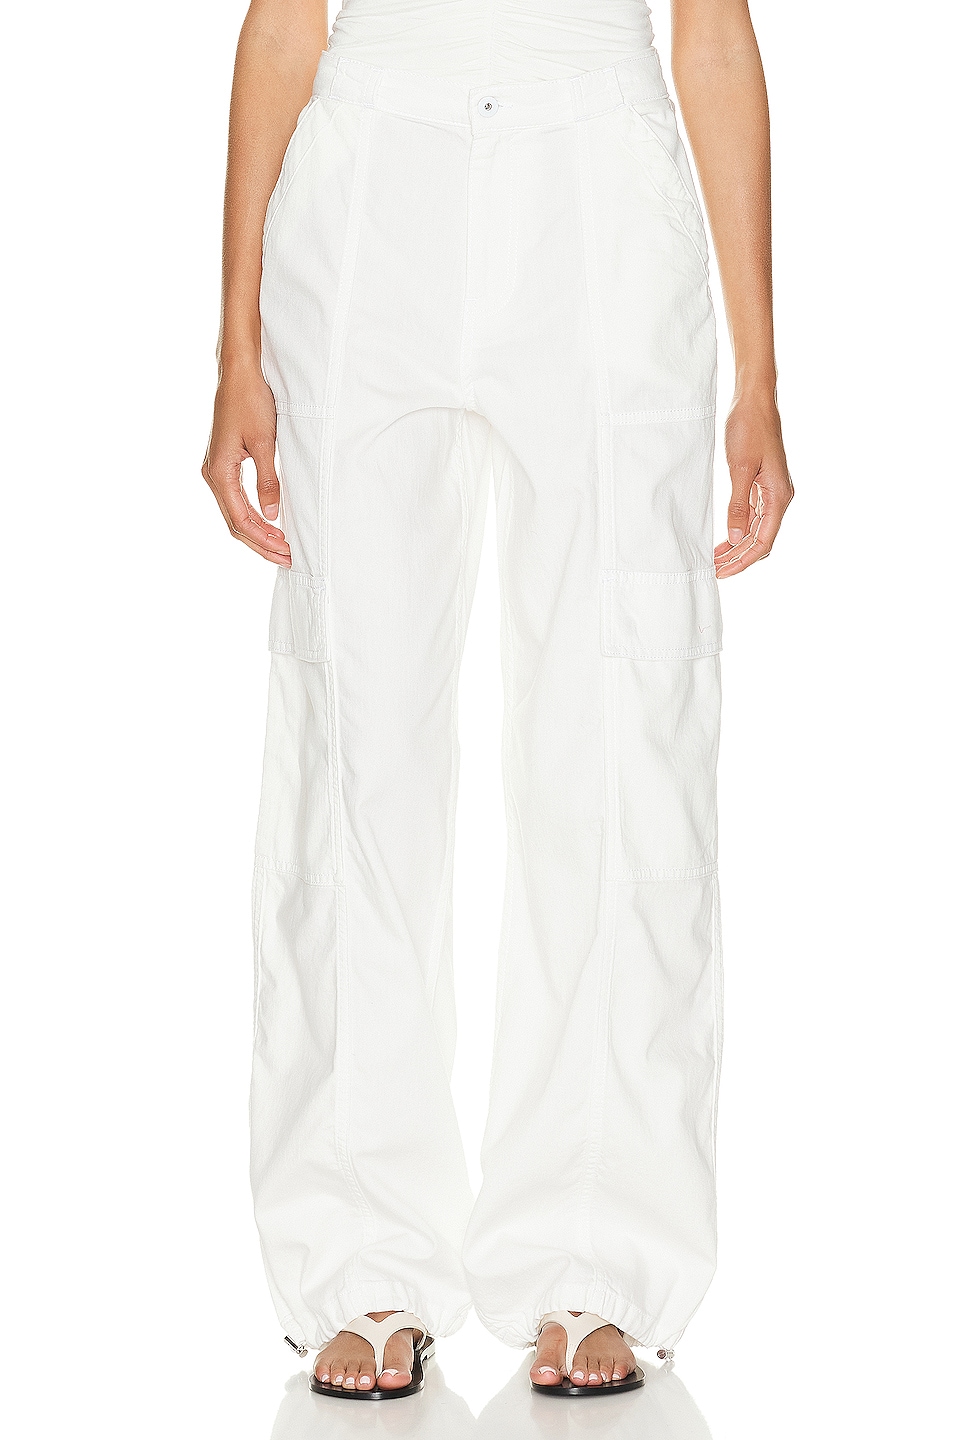 Calista Denim Shirting Utility Pant in White